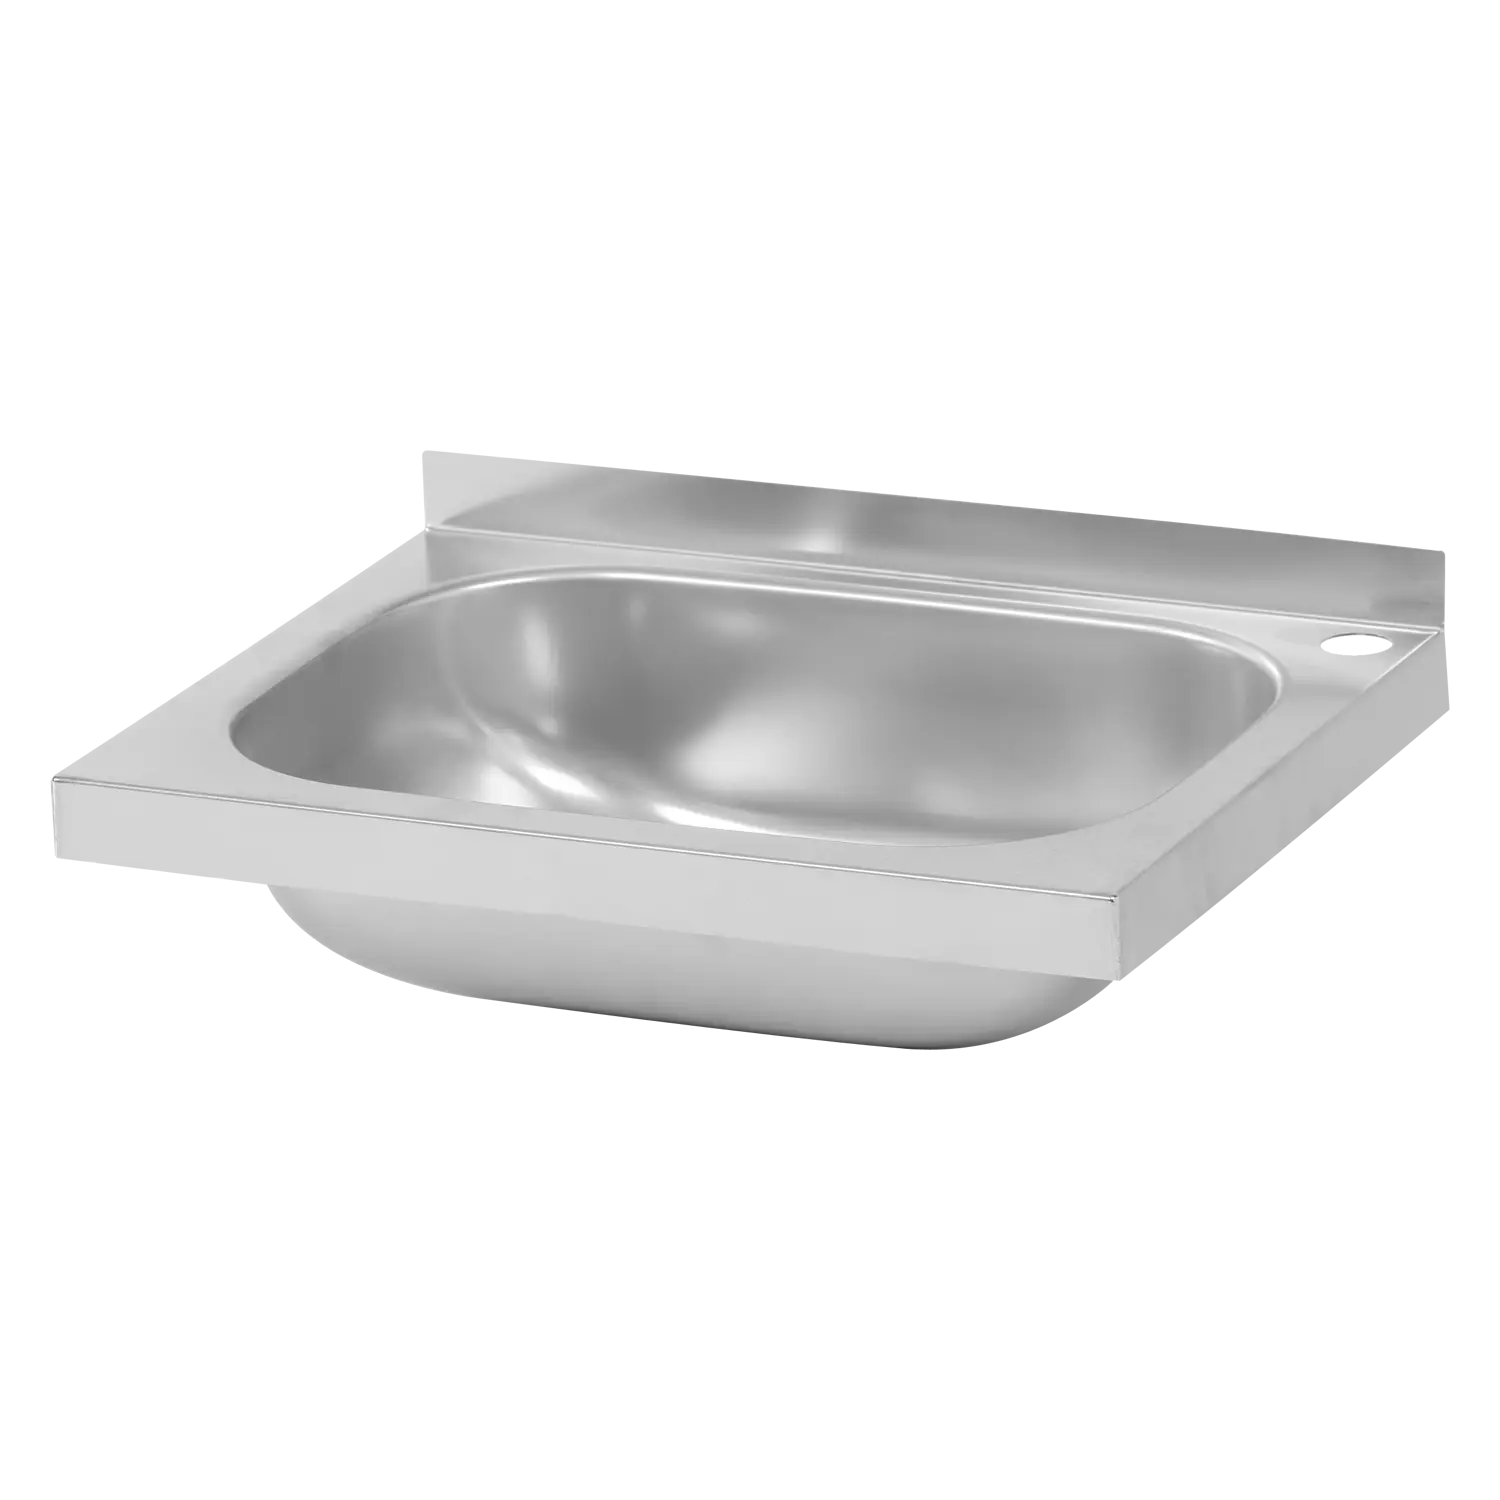 Oval semi-finished sink | REDFOX - UM 01